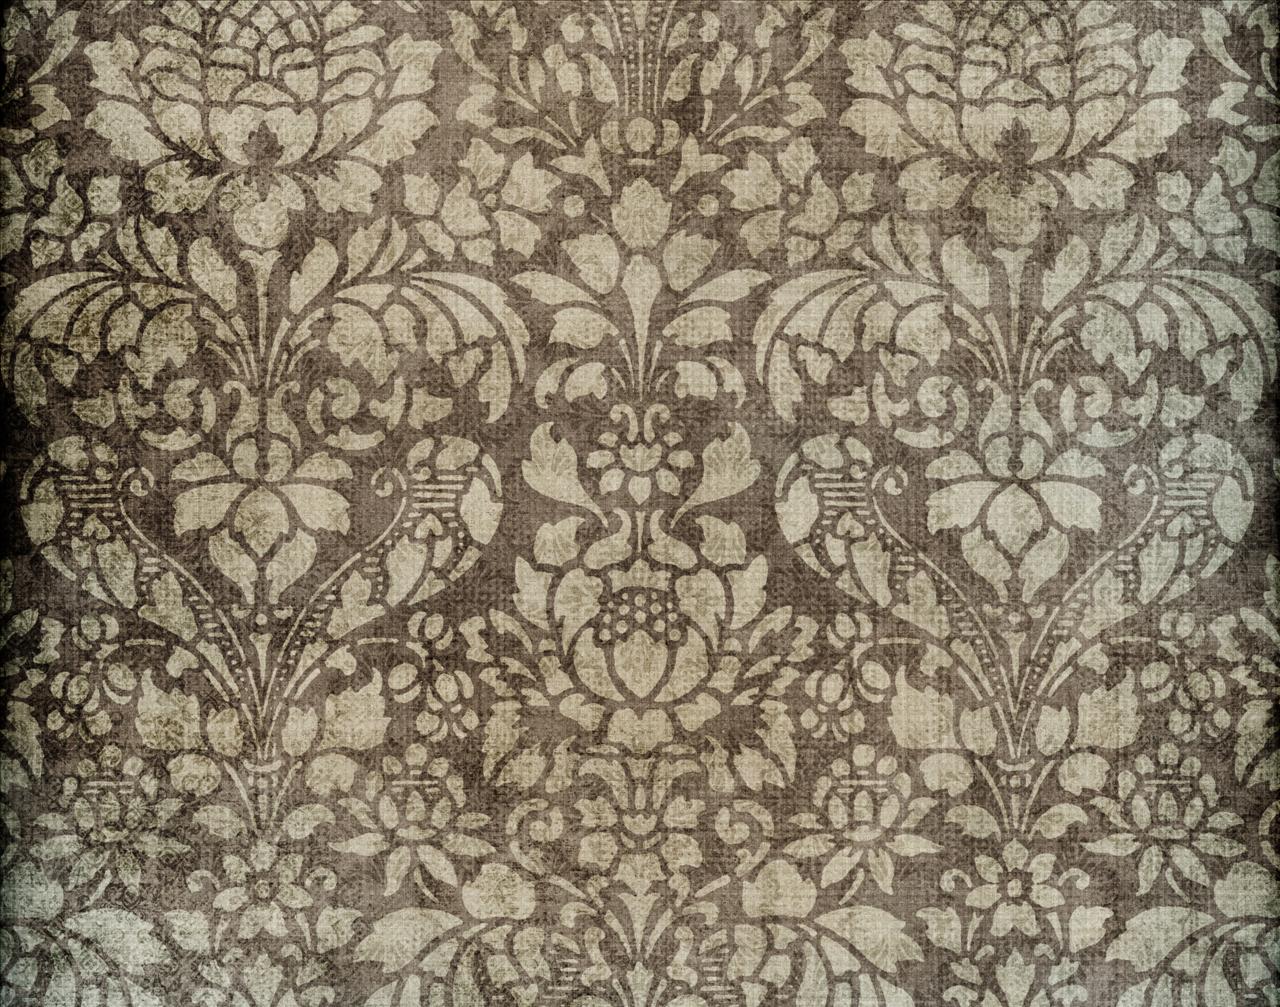 classic wallpaper designs,pattern,brown,textile,design,lace